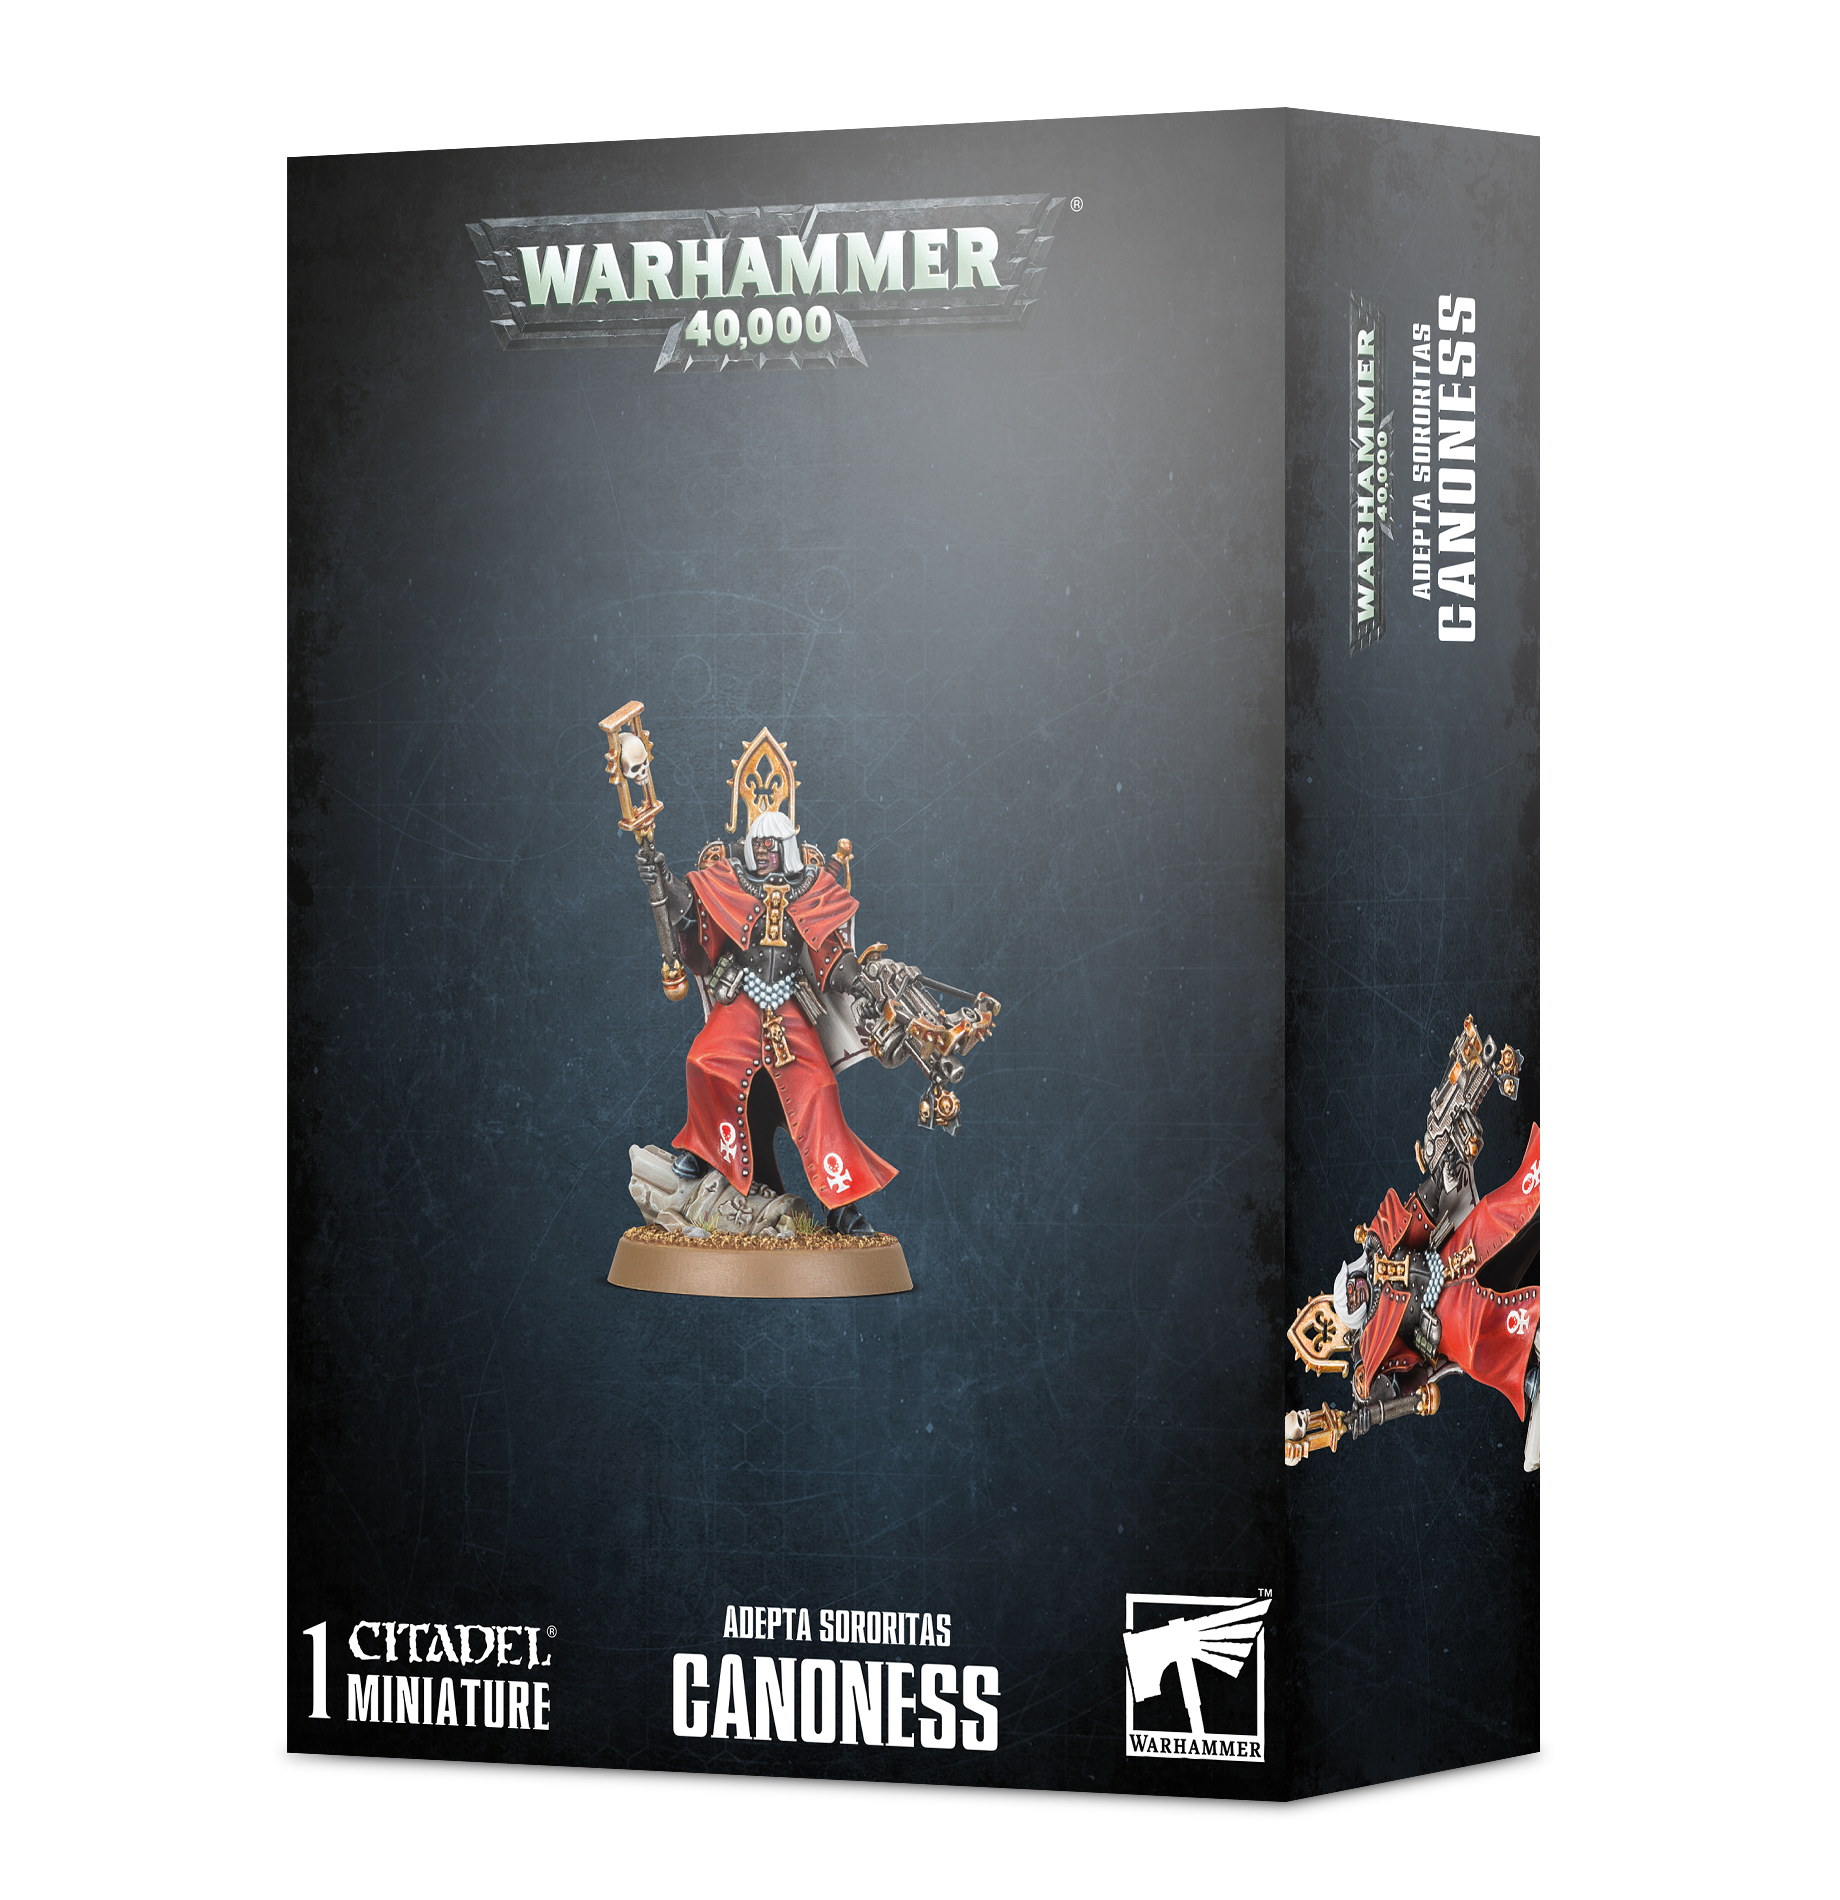 Canoness - 52-21 - Adepta Sororitas - Warhammer 40.000